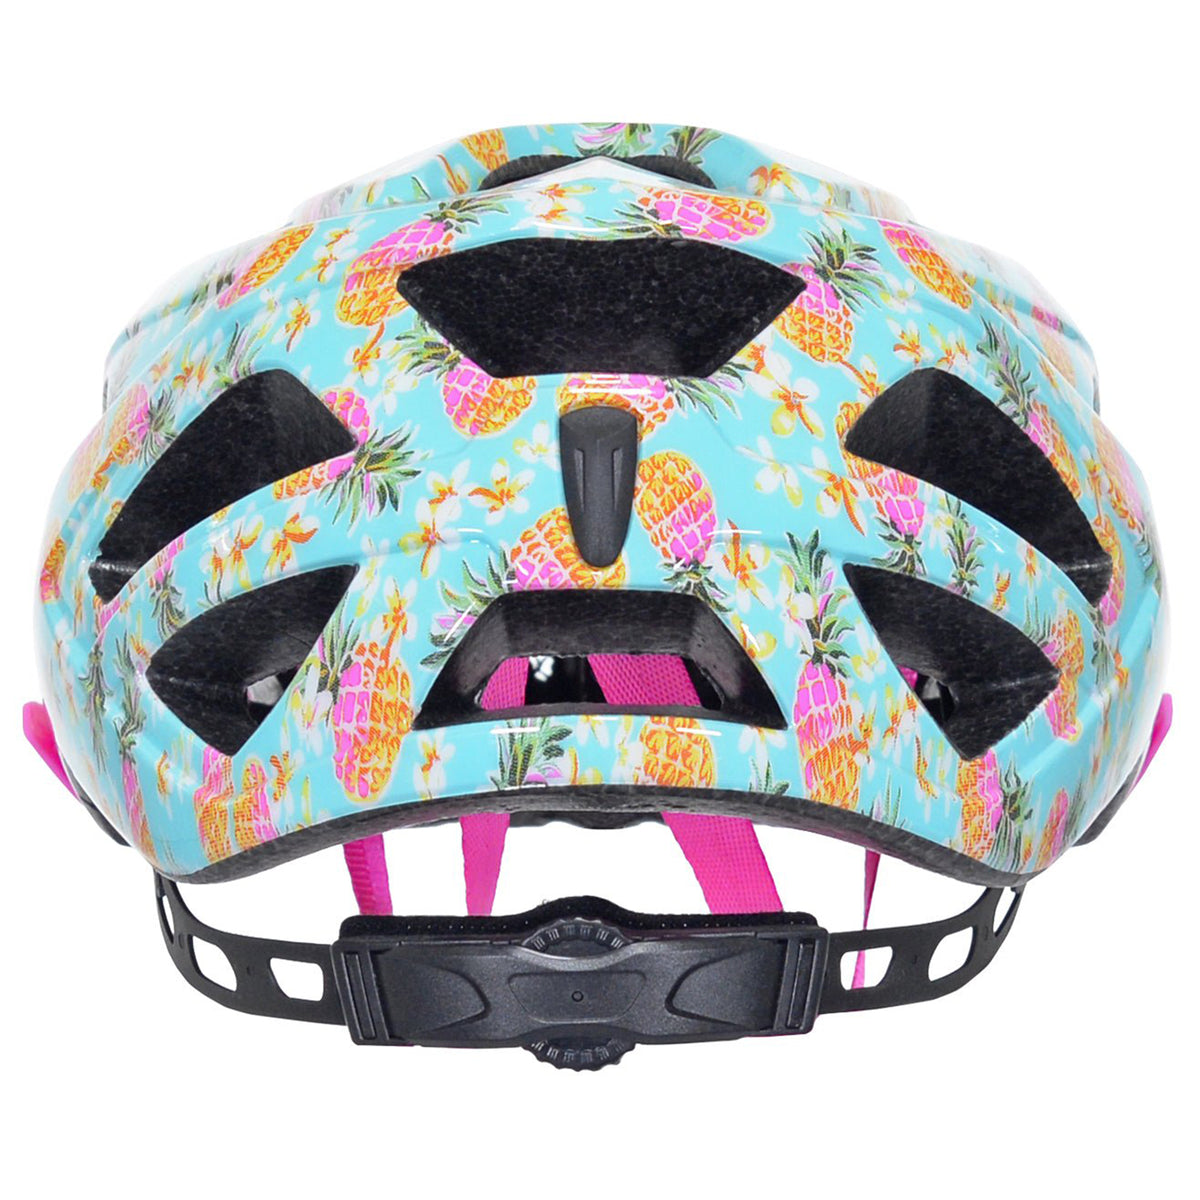 Margaritaville® Pineapple Adult Bicycle Helmet | Helmet for Women Ages 13+